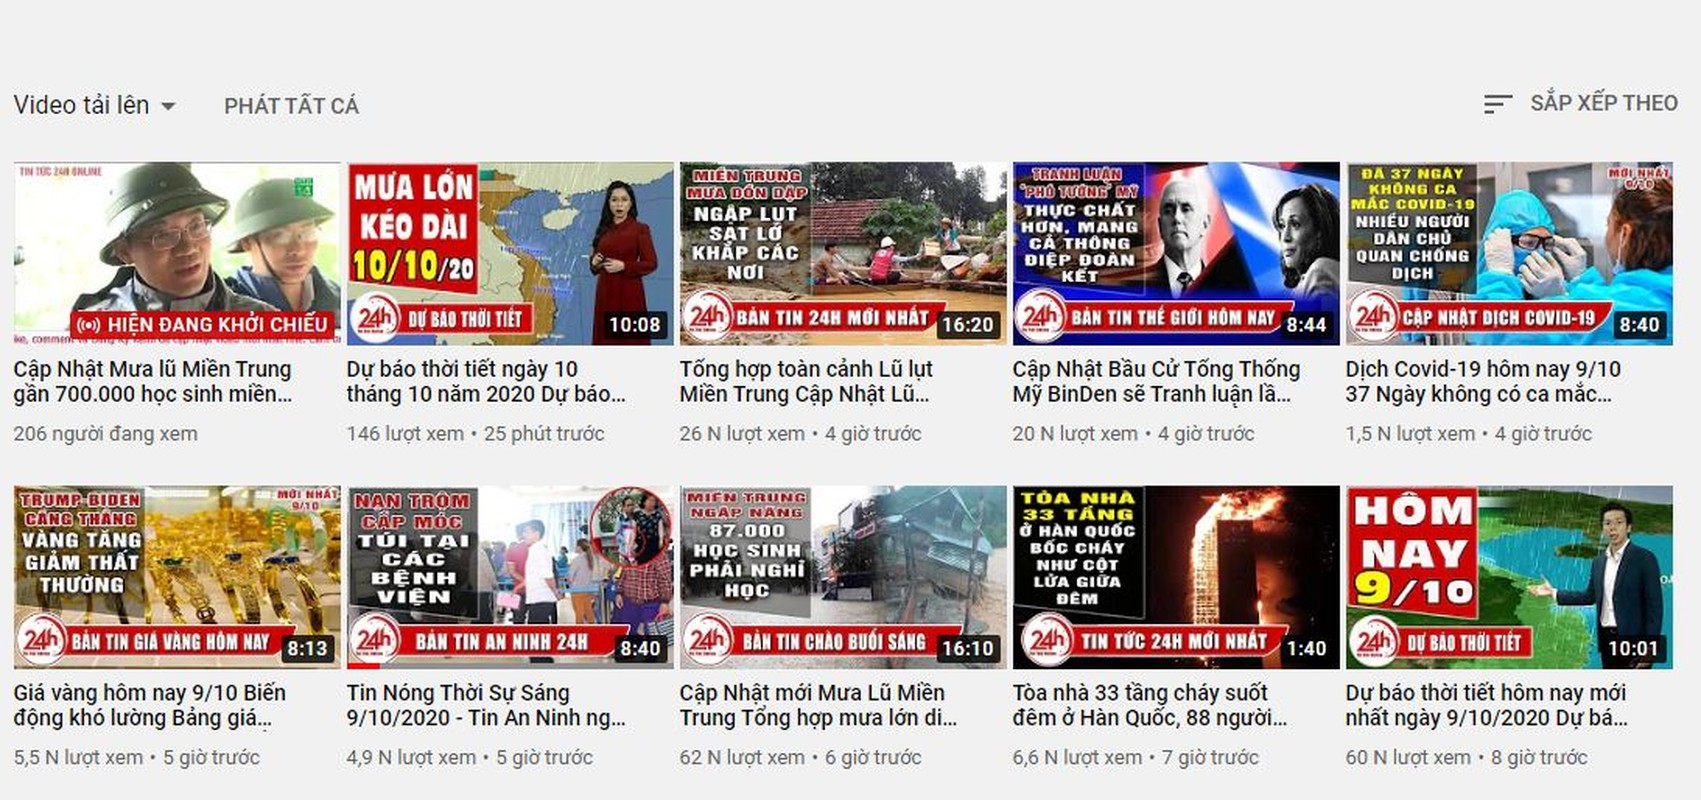 Diem mat kenh Youtube Viet chuyen “chom” ban quyen, cau view re tien-Hinh-5